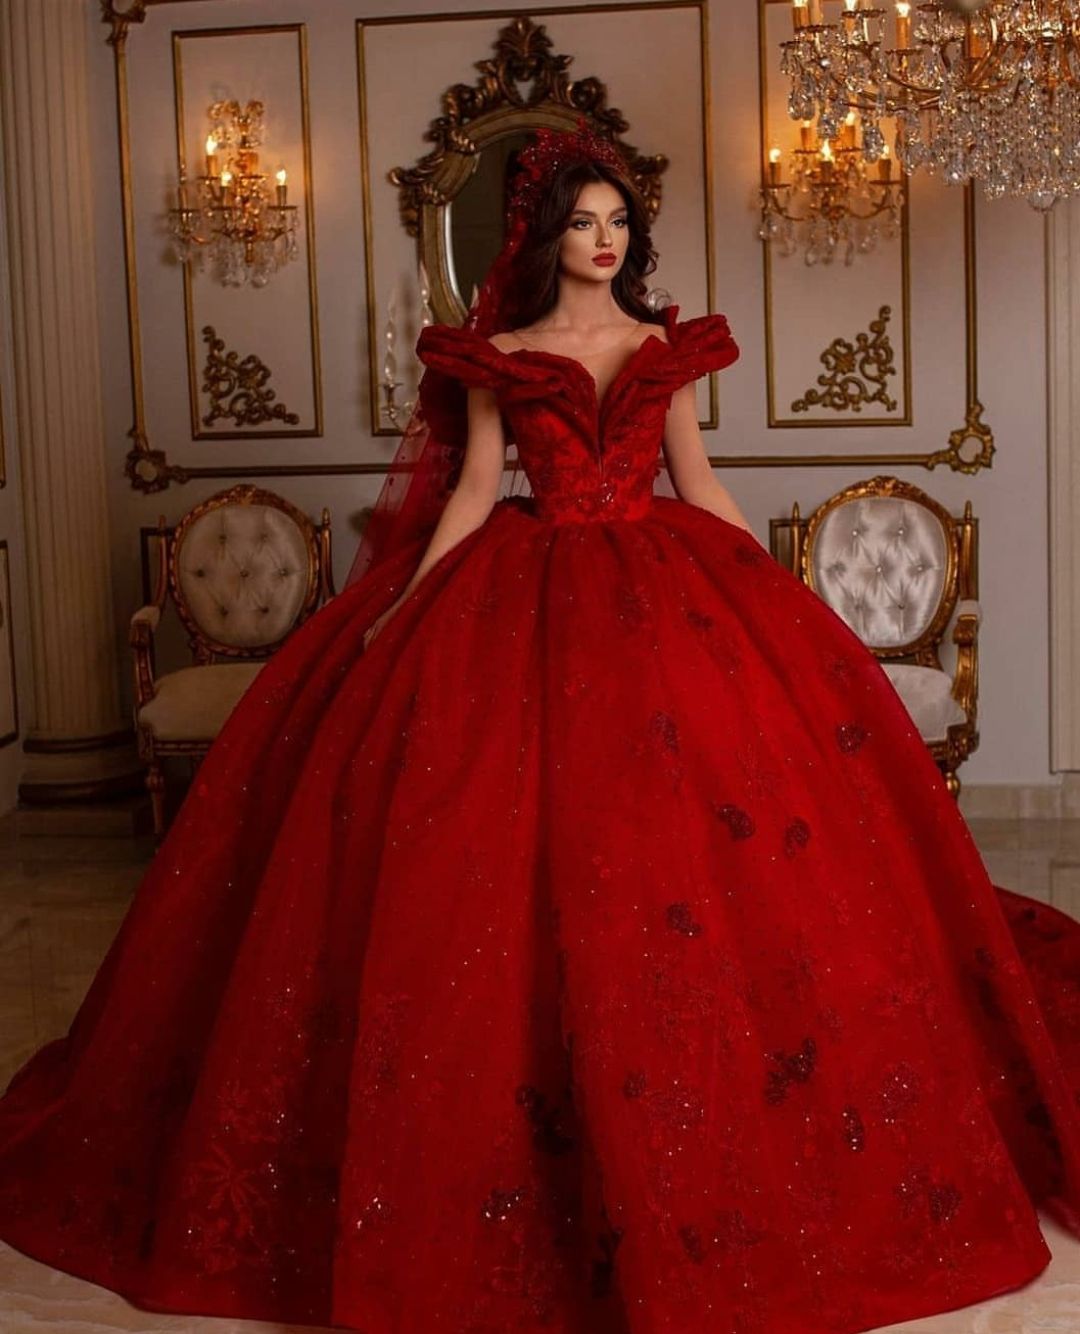 2021 Princesa Vestidos De Novia Rojos Volantes Bola De Encaje Luchas De Novia Lujoso Talla Grande Vestido De Novia 175,42 € DHgate